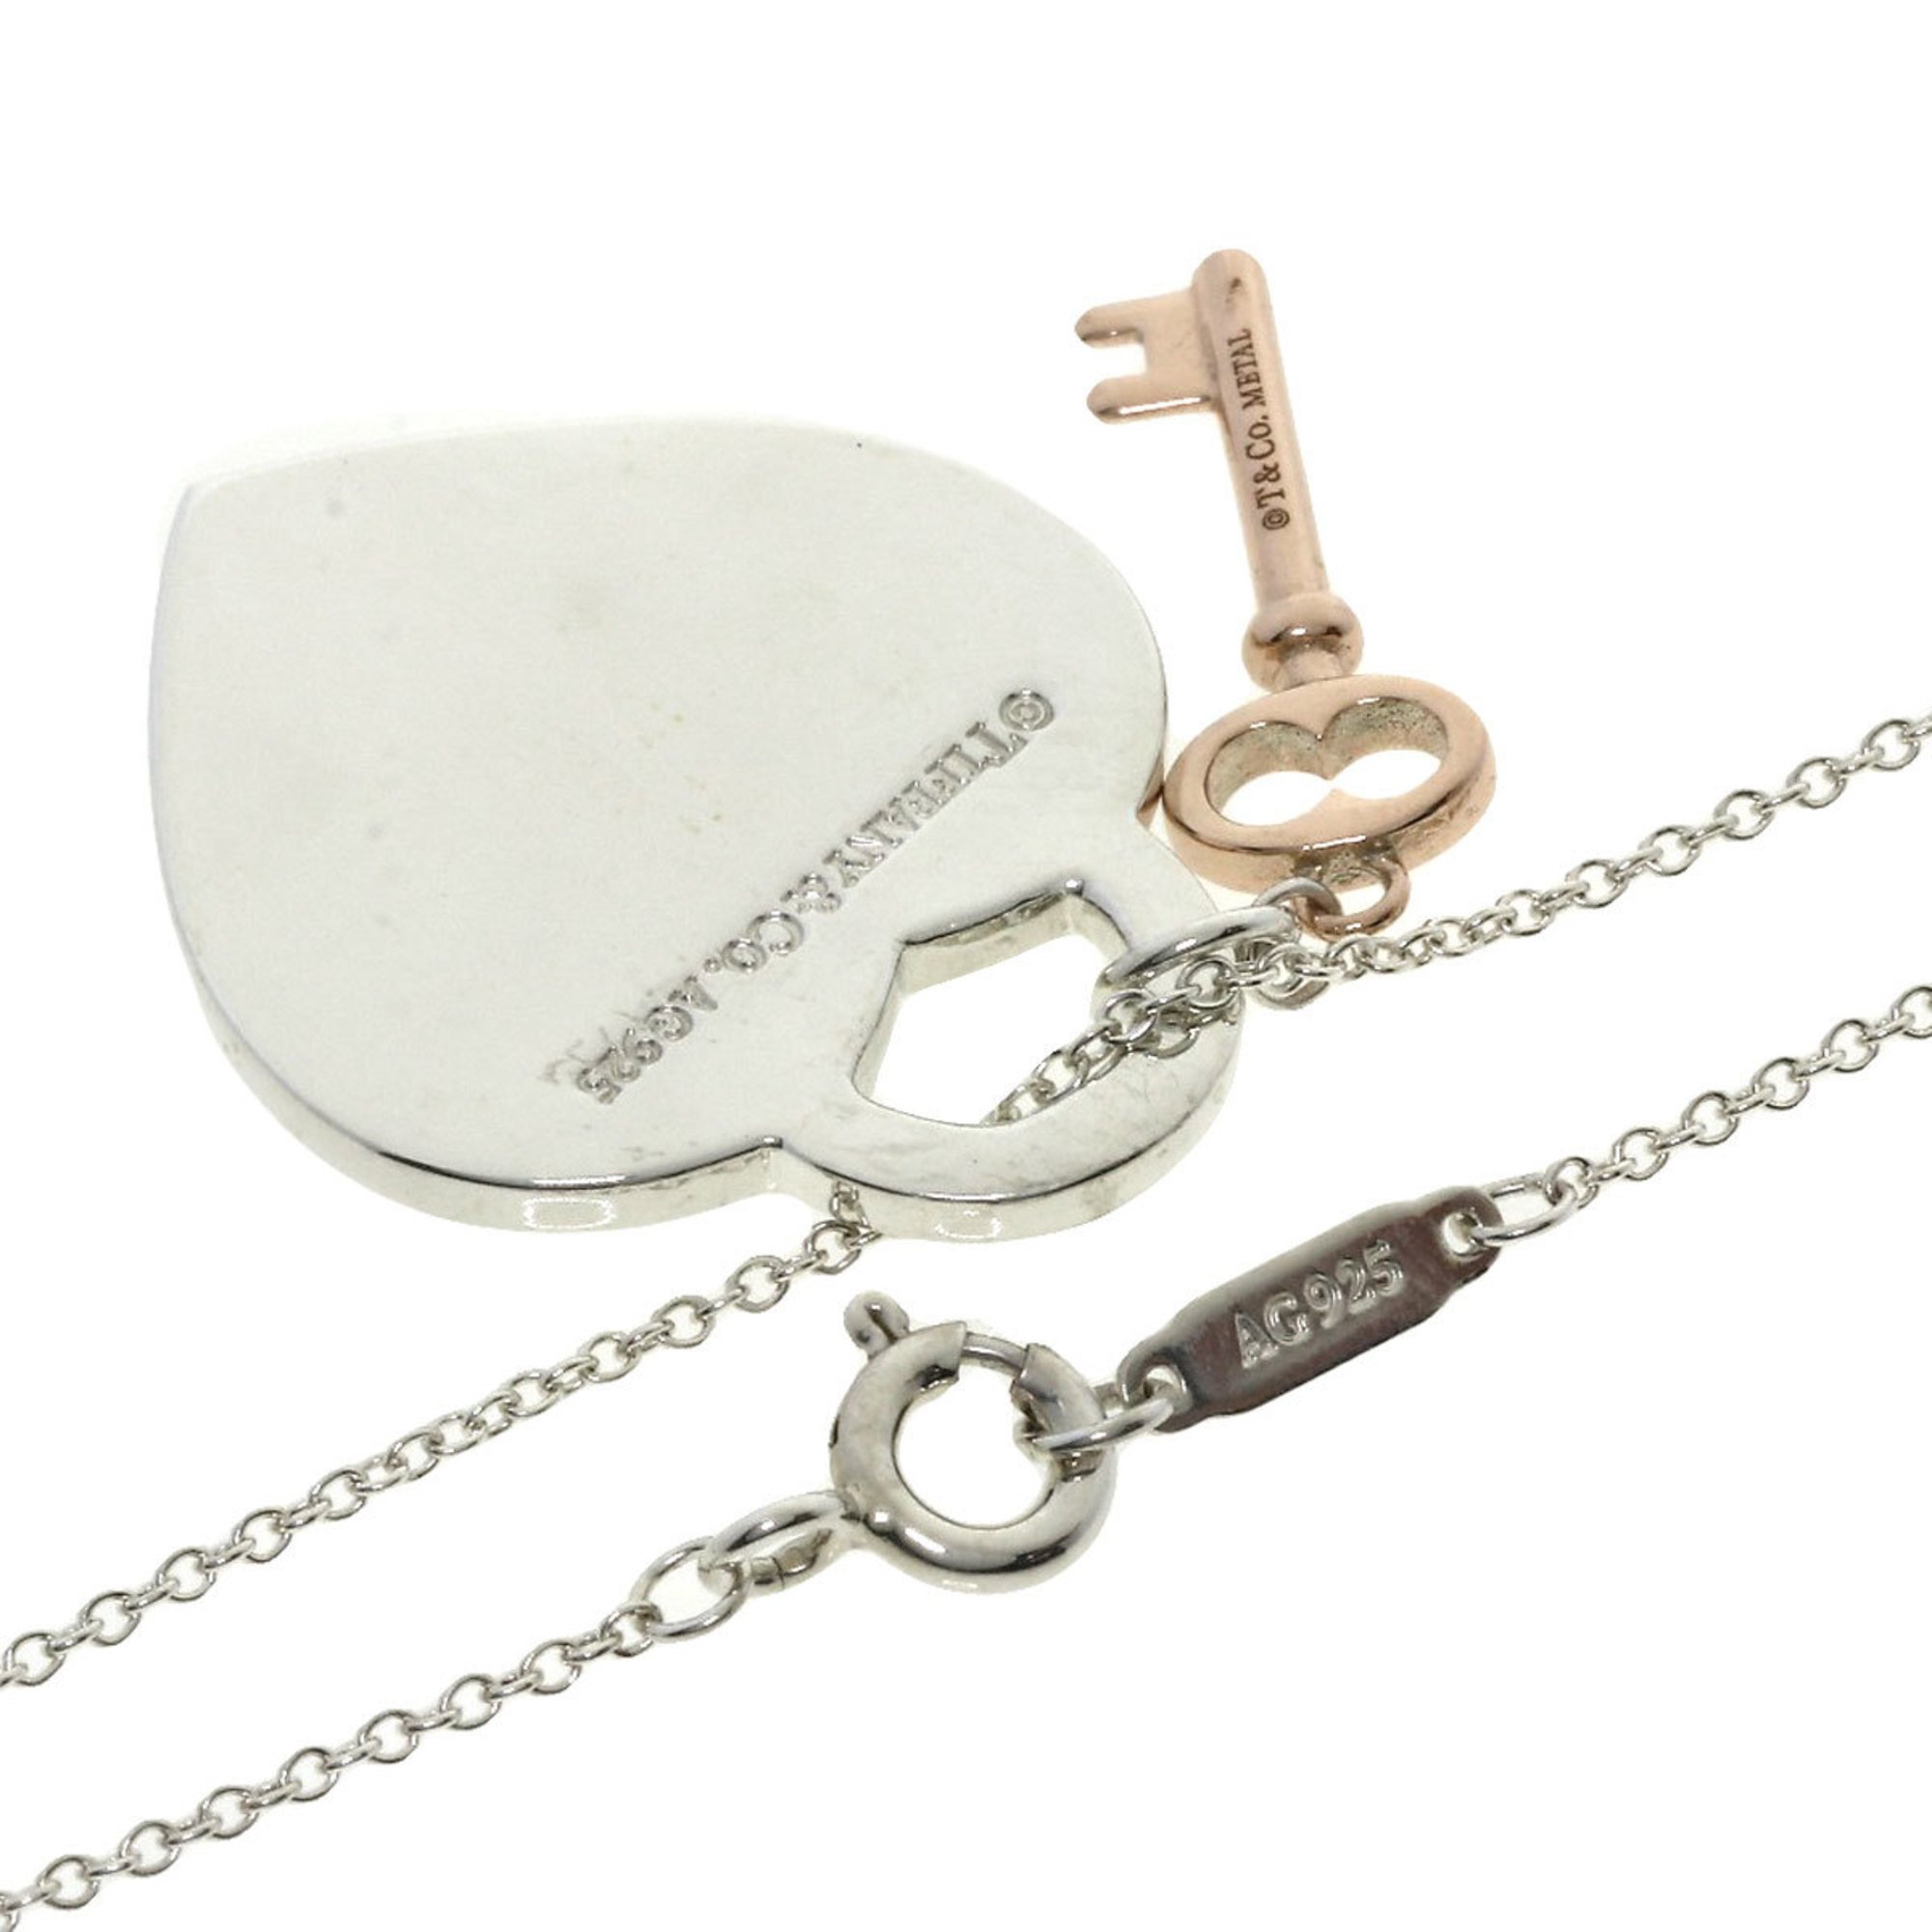 Tiffany Return to Heart Key Necklace in Silver Rubedo Metal for Women